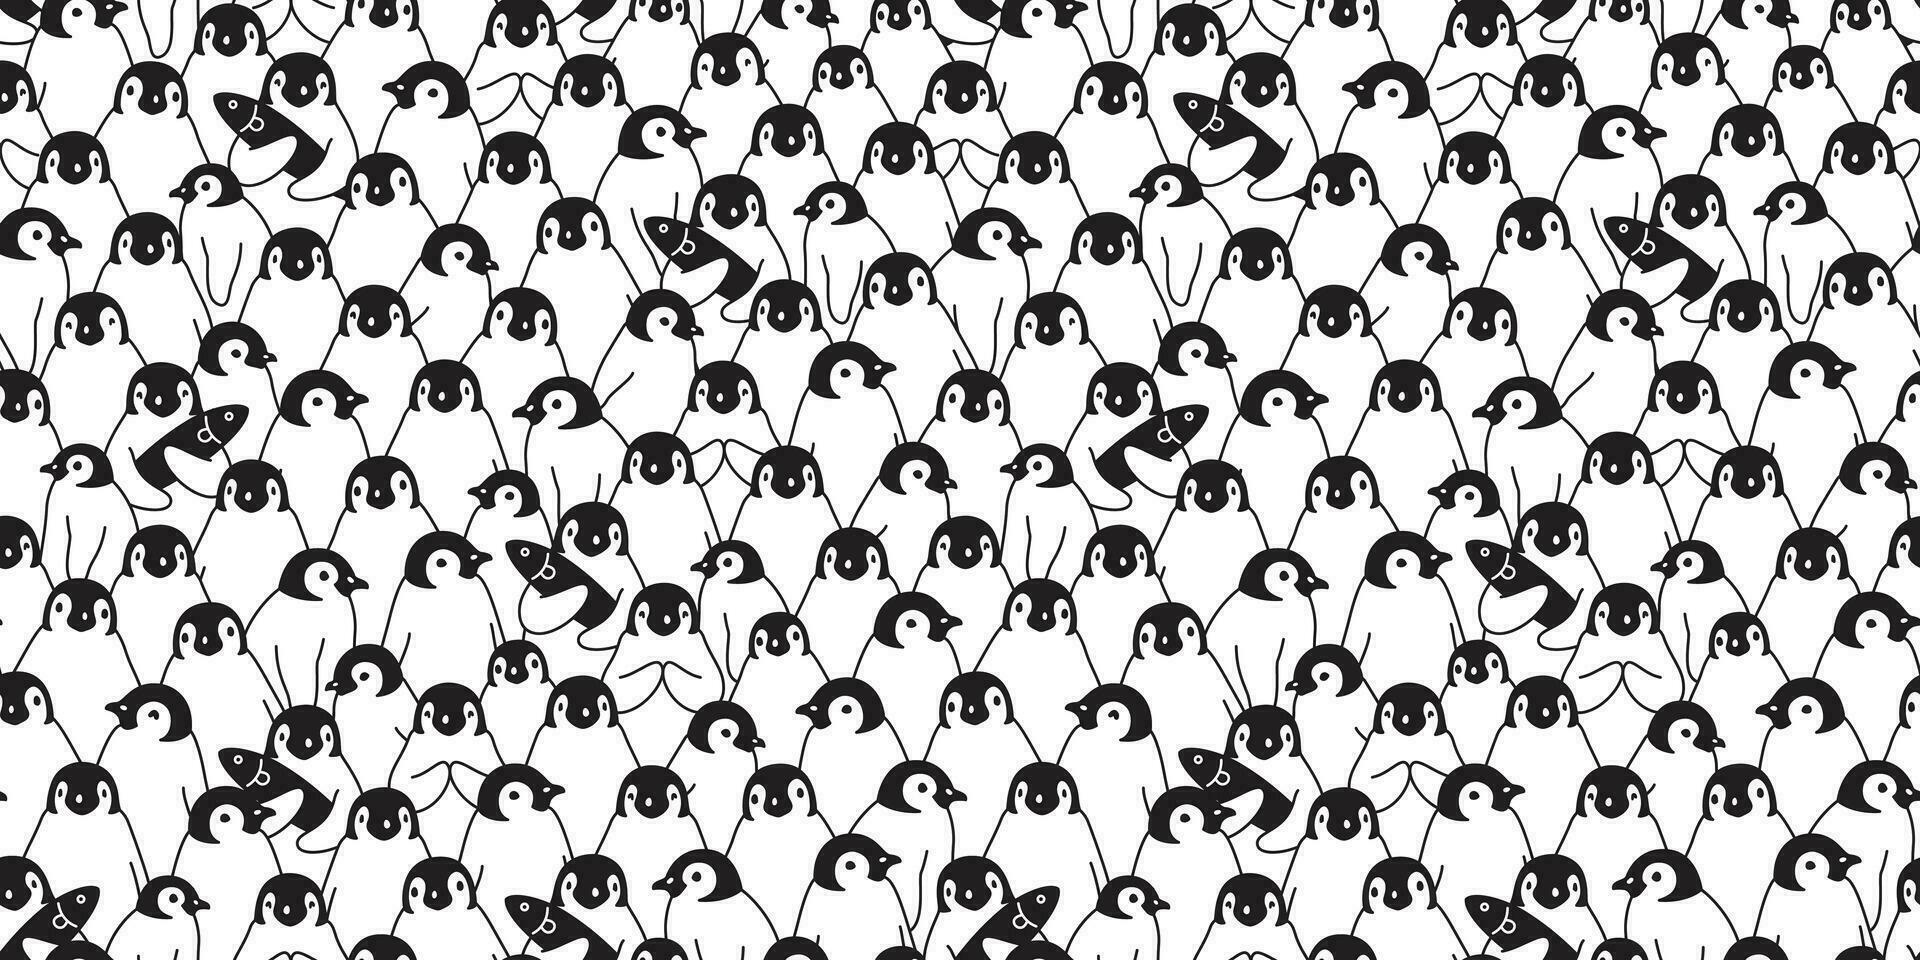 penguin Seamless pattern vector bird cartoon polar bear scarf isolated repeat wallpaper tile background illustration doodle design white